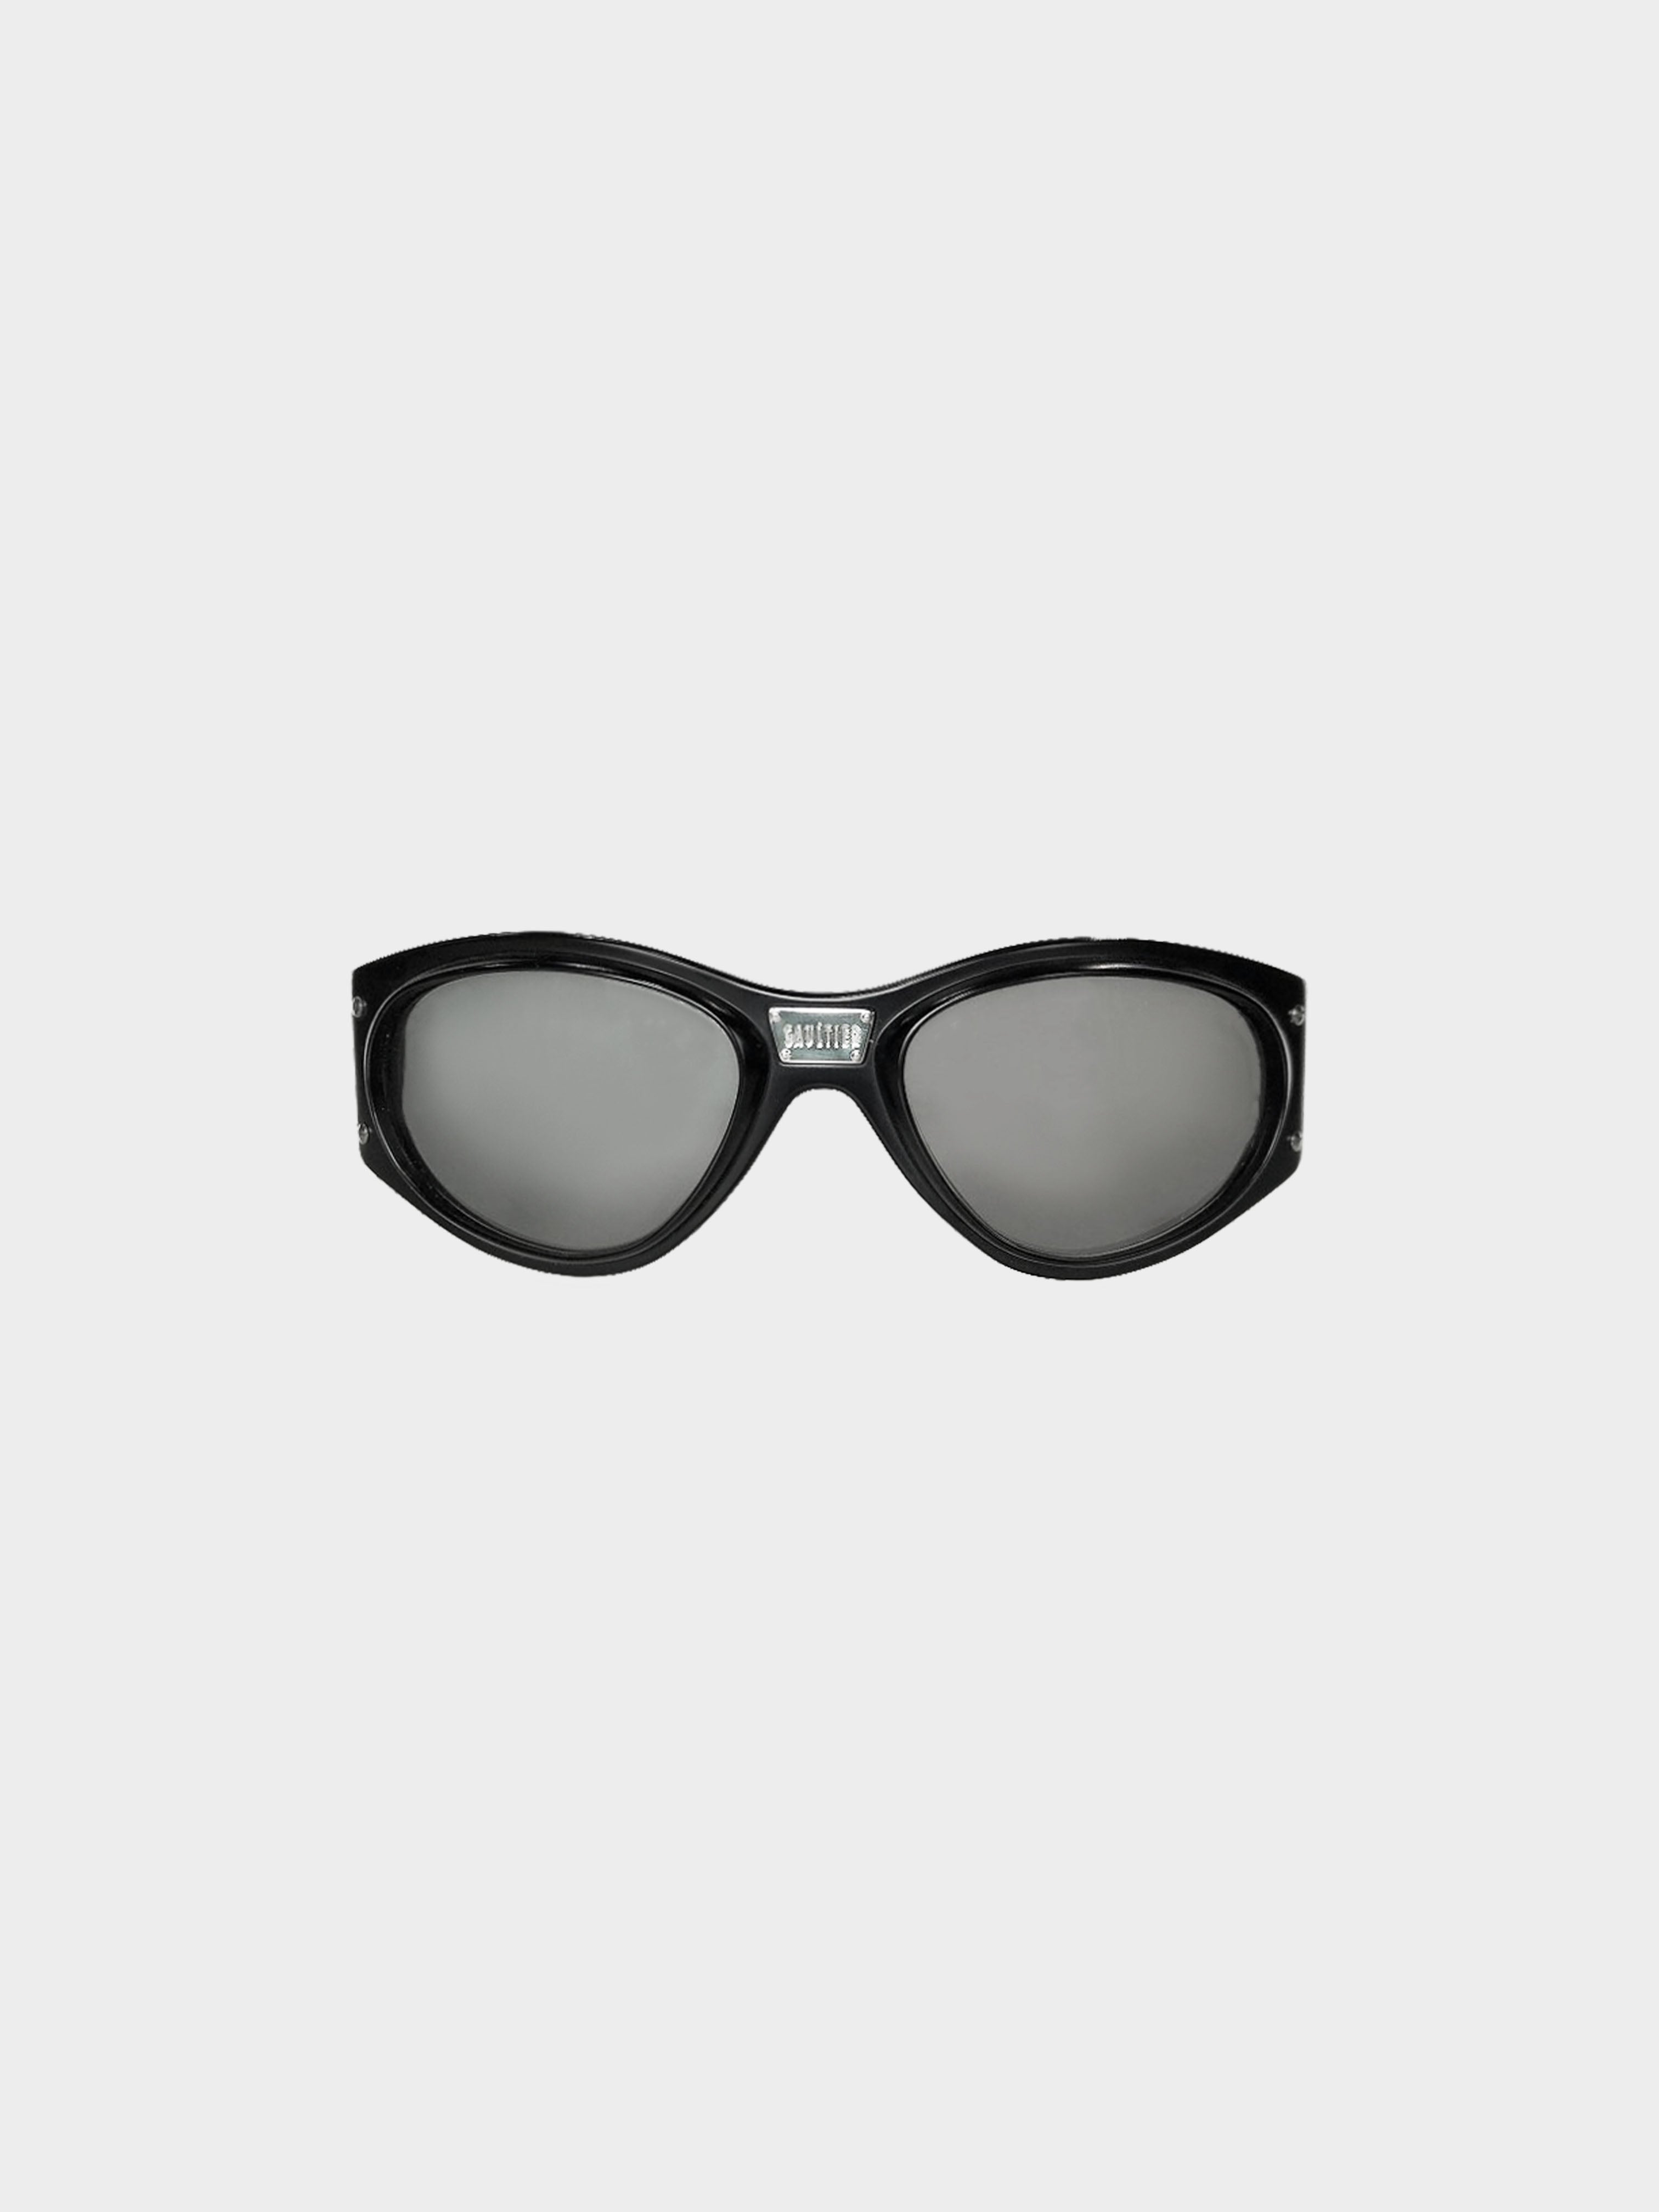 Jean Paul Gaultier 1990s Steampunk Sunglasses